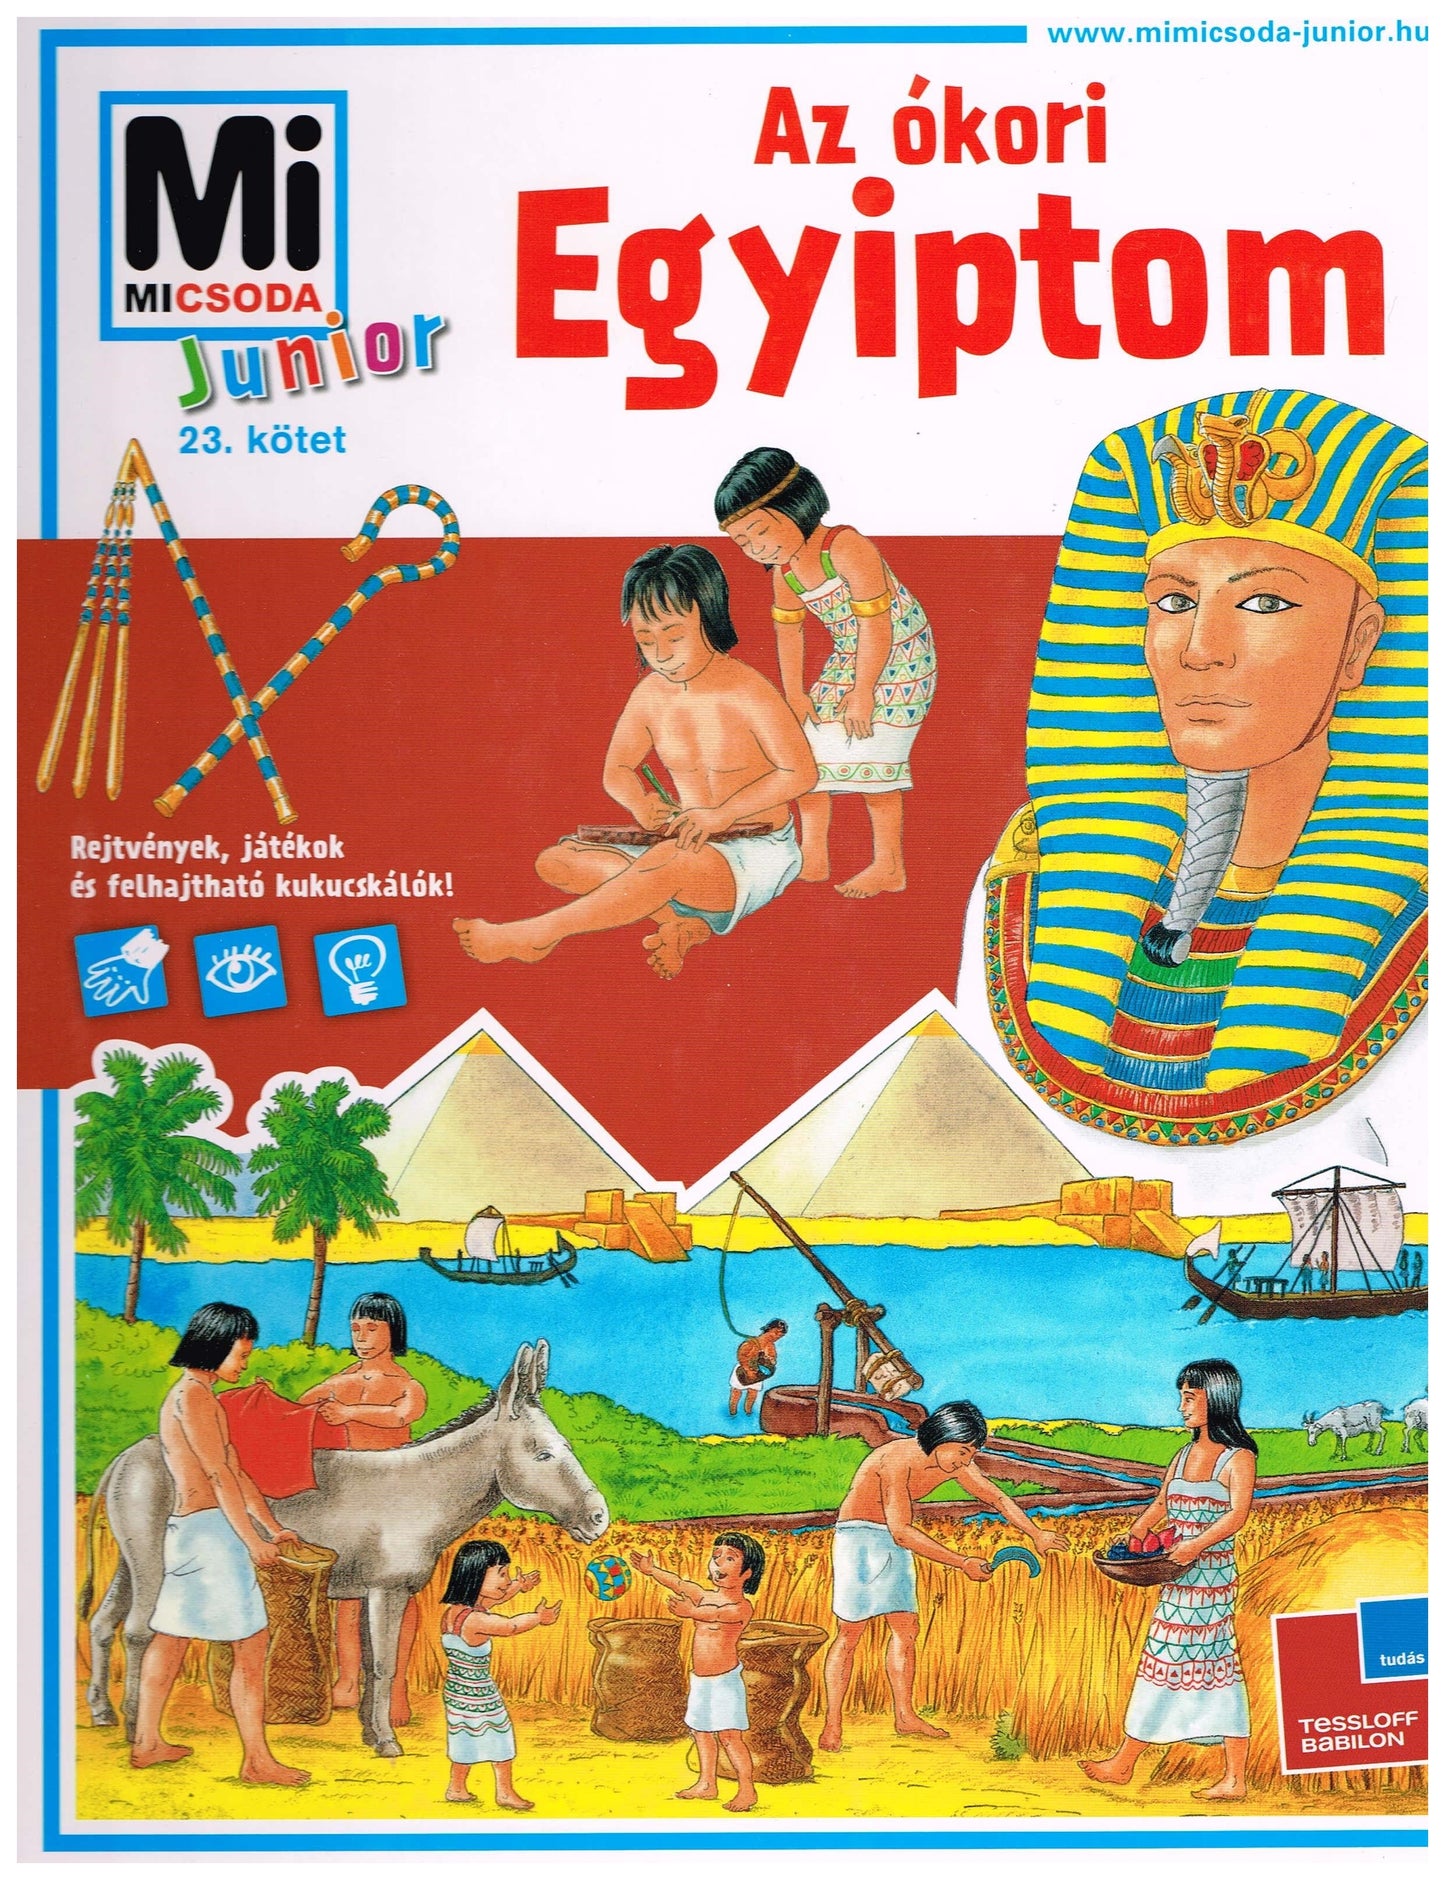 Az ókori Egyiptom - Mi Micsoda Junior 23.